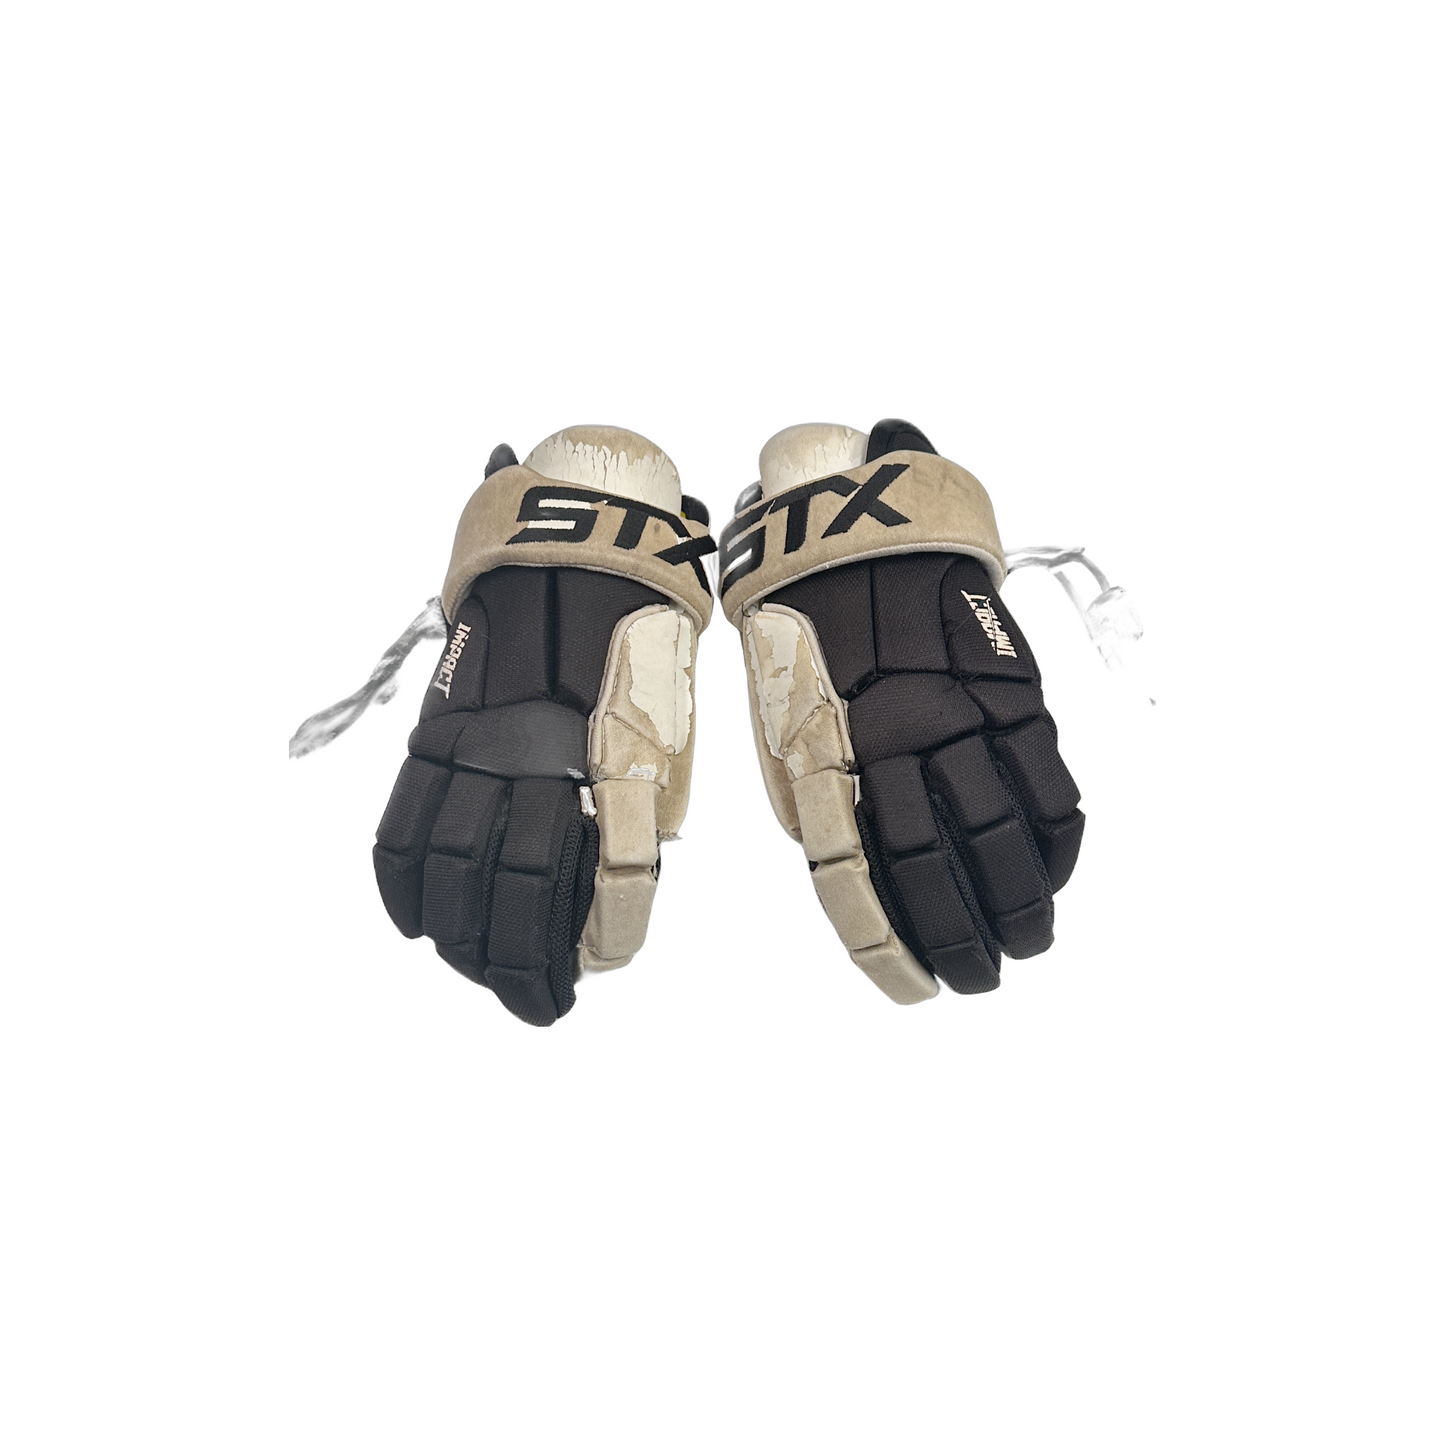 Impact STX lacrosse gloves